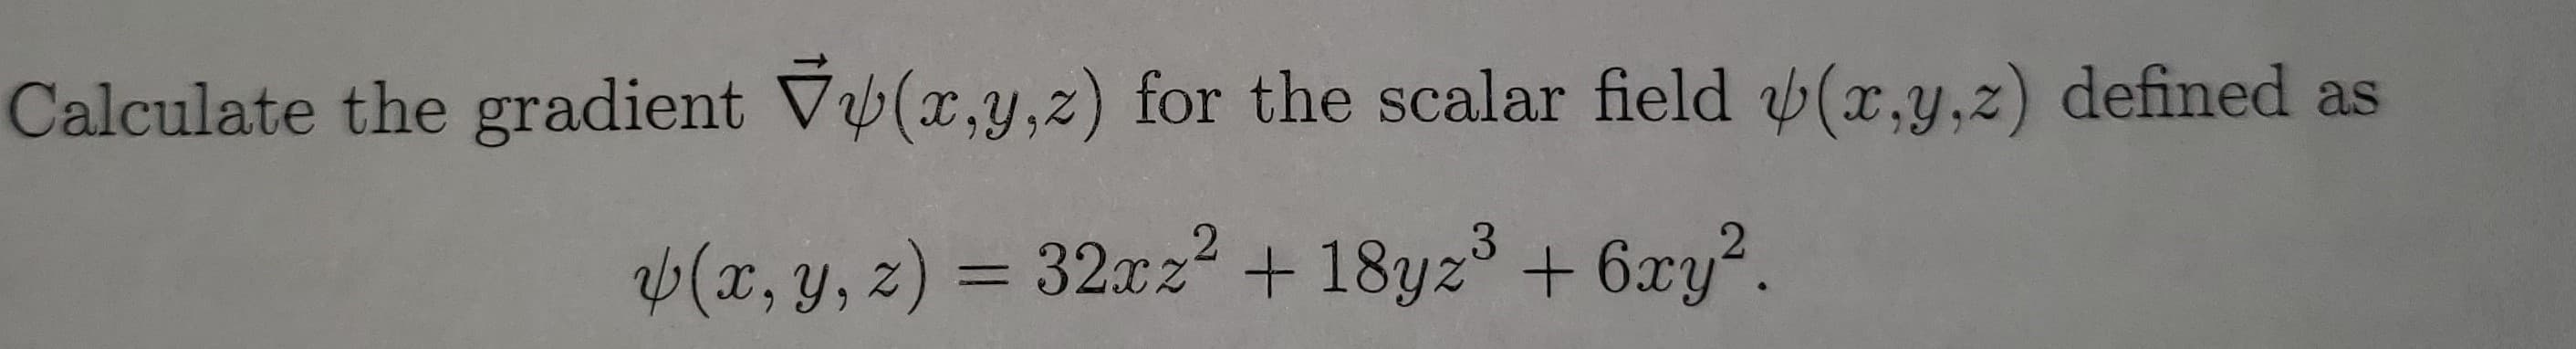 Calculate the gradient V(x,y,z) for the scalar field (x,y,z) defined as
(x, y, z) = 32xz + 18yz3 + 6xy?.
